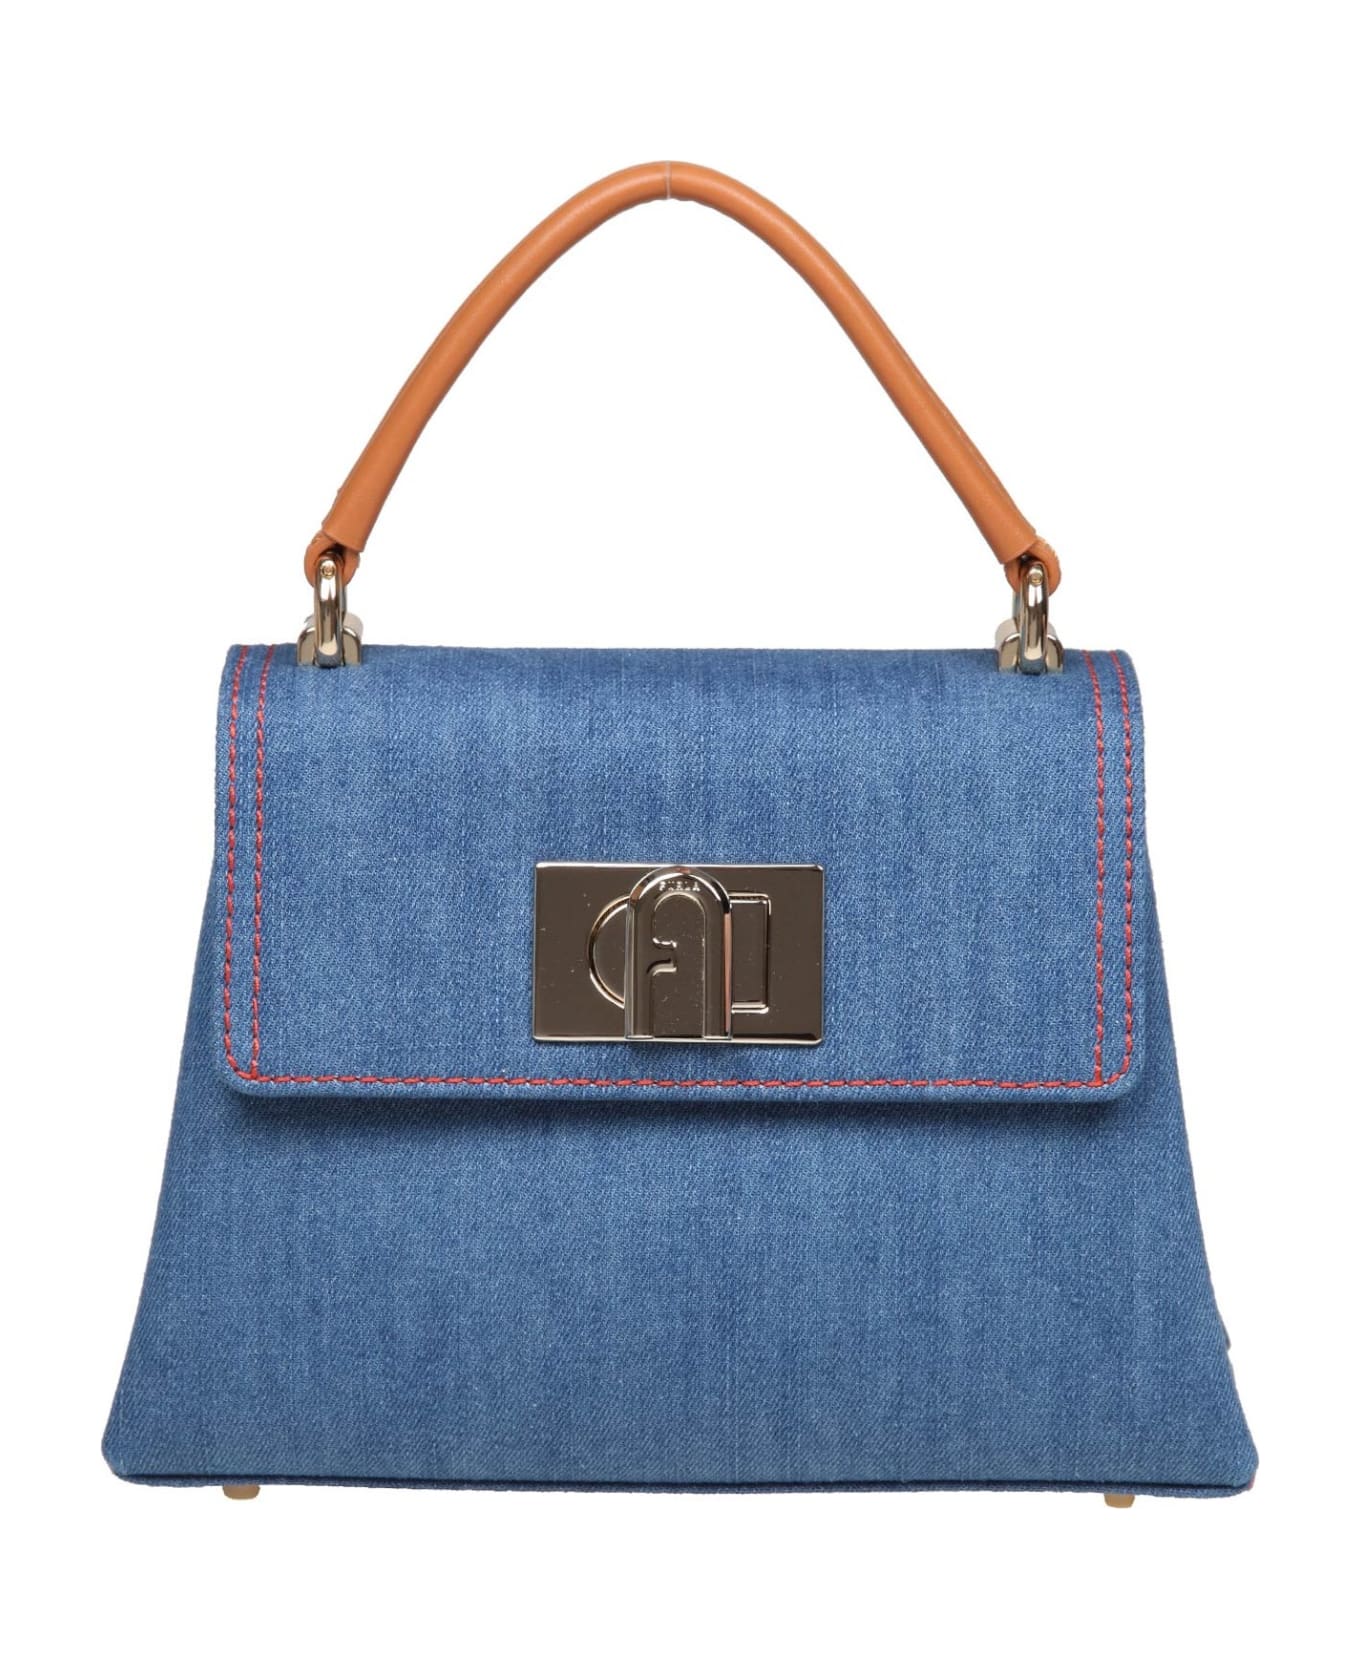 Furla 1927 Mini Handbag In Blue Jeans Fabric - Mediterranean blue トートバッグ